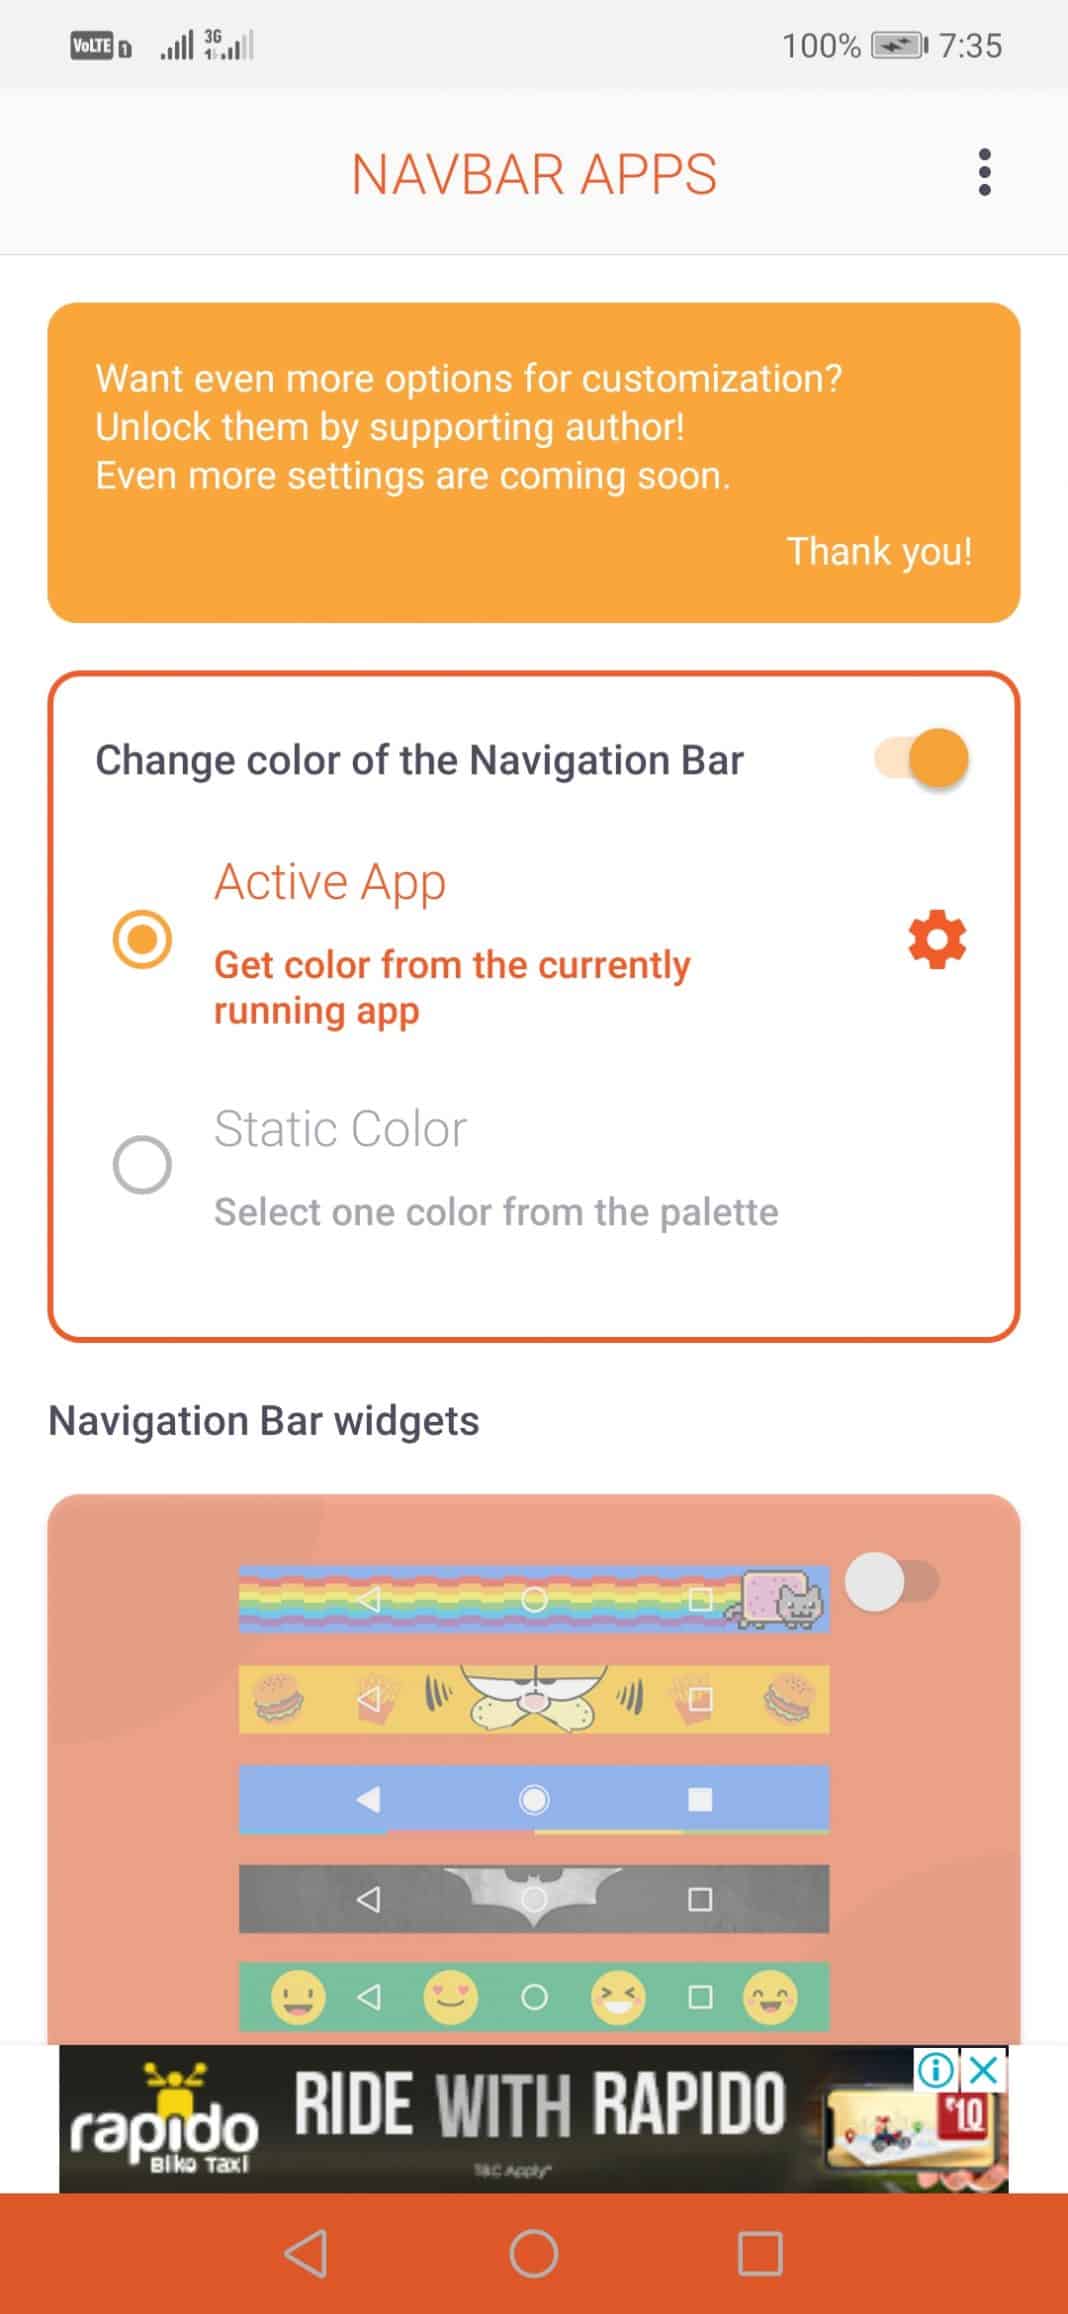 Select 'Active app' option